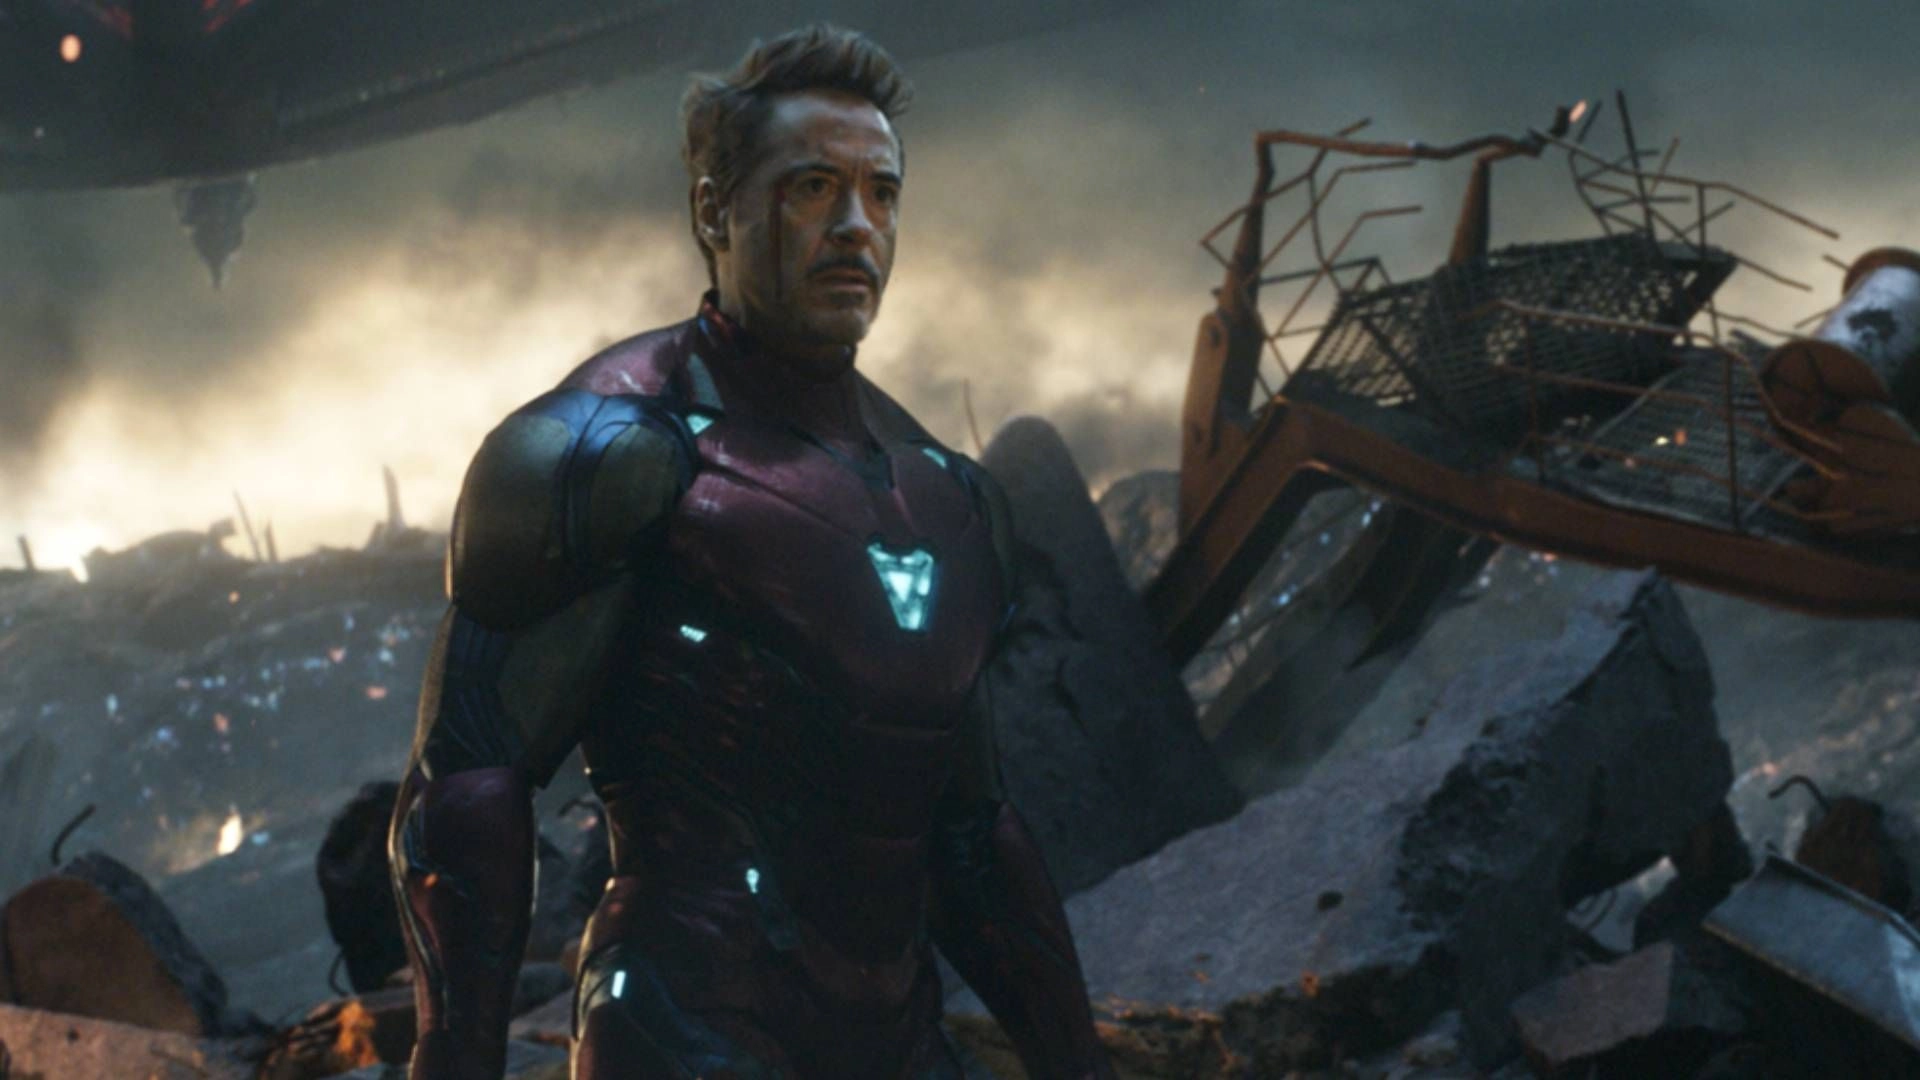 Tony Stark's Death: An Epoch in MCU's Timeline Today